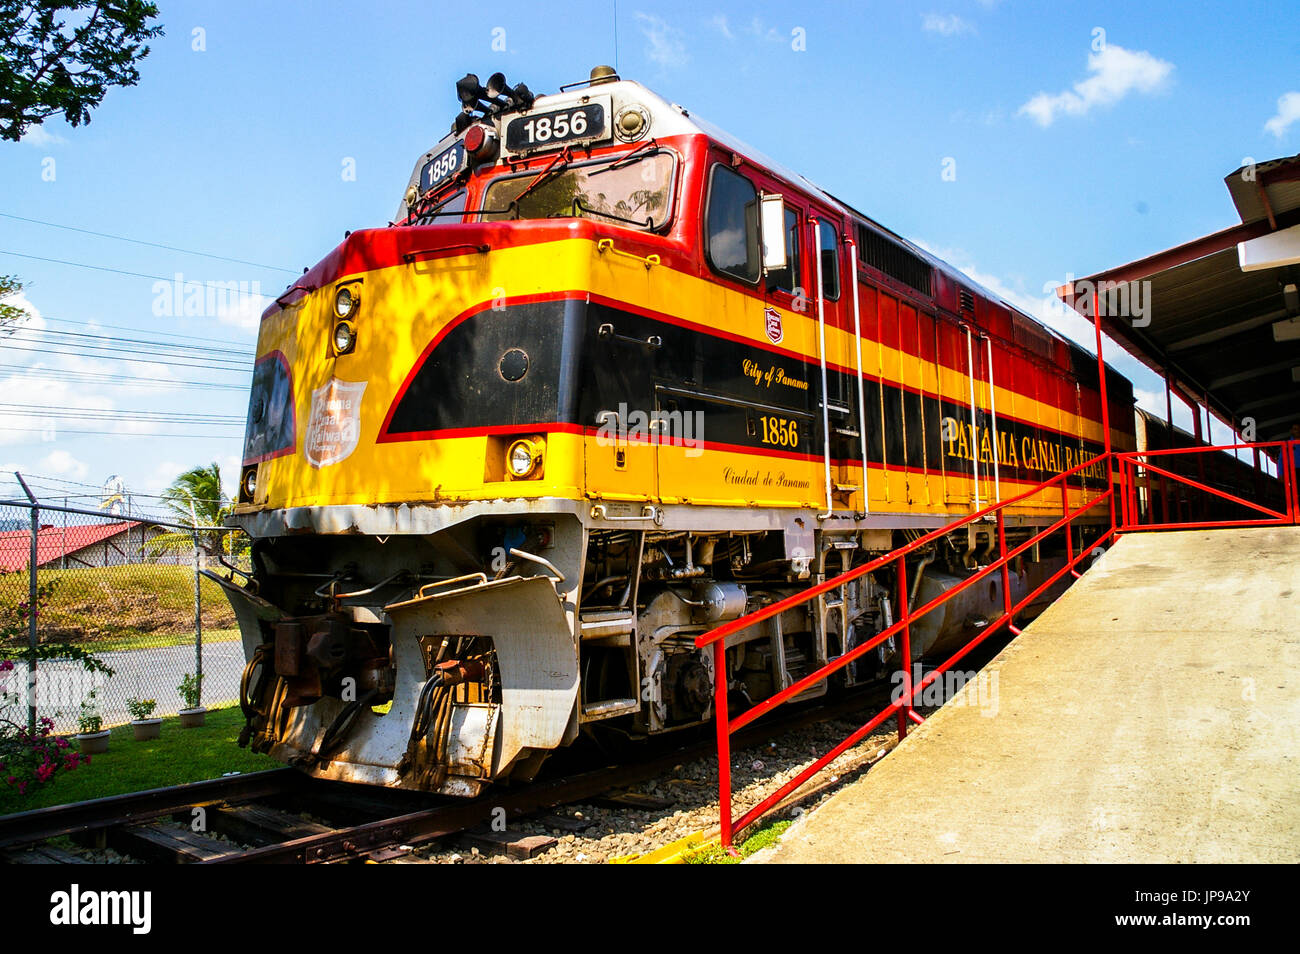 Panama canal railway locomotive at the train station in Panama City Stock Photo